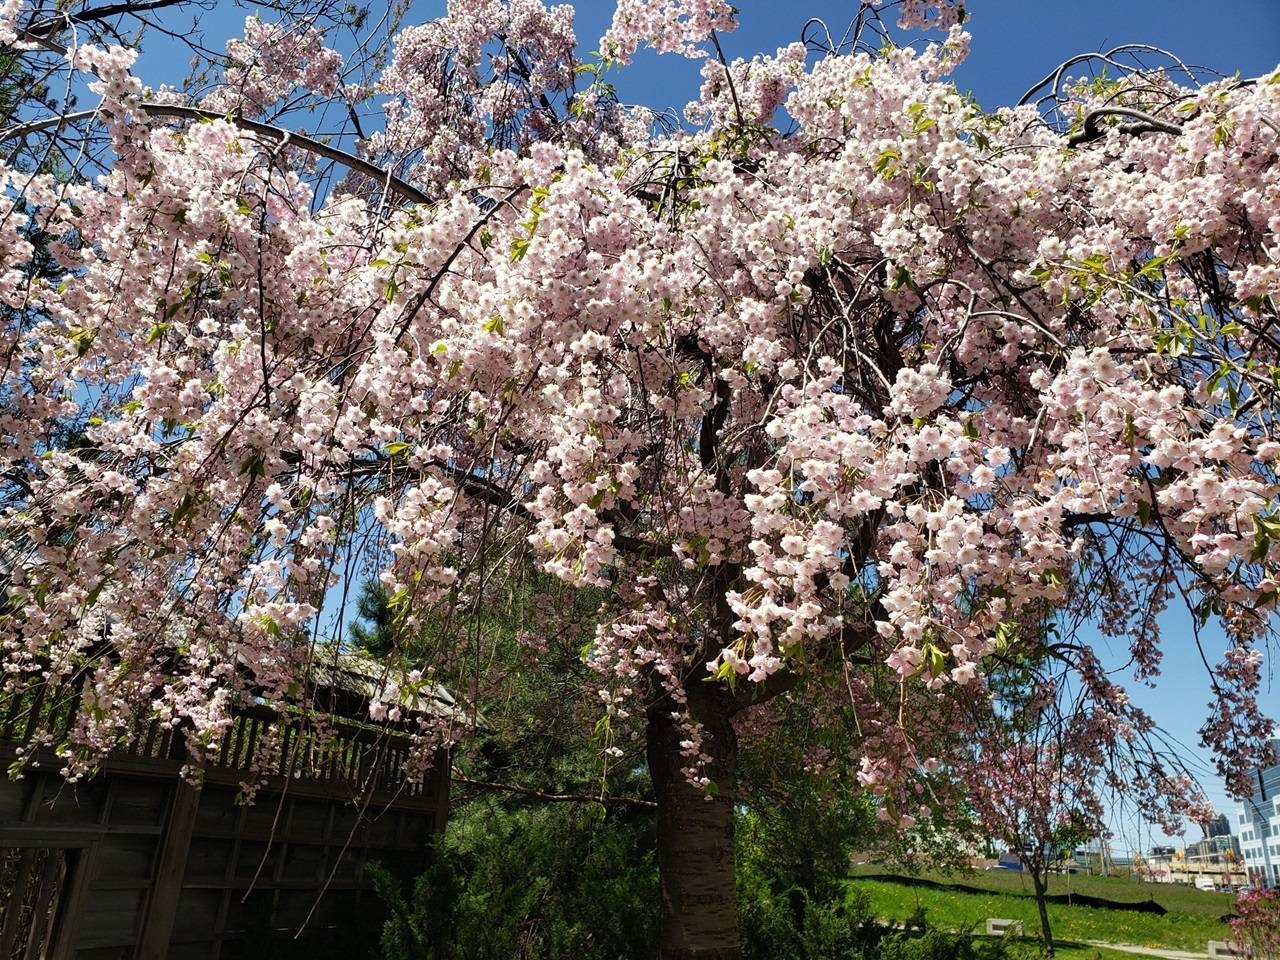 Cherry blossoms at Kariya Park in Mississauga.